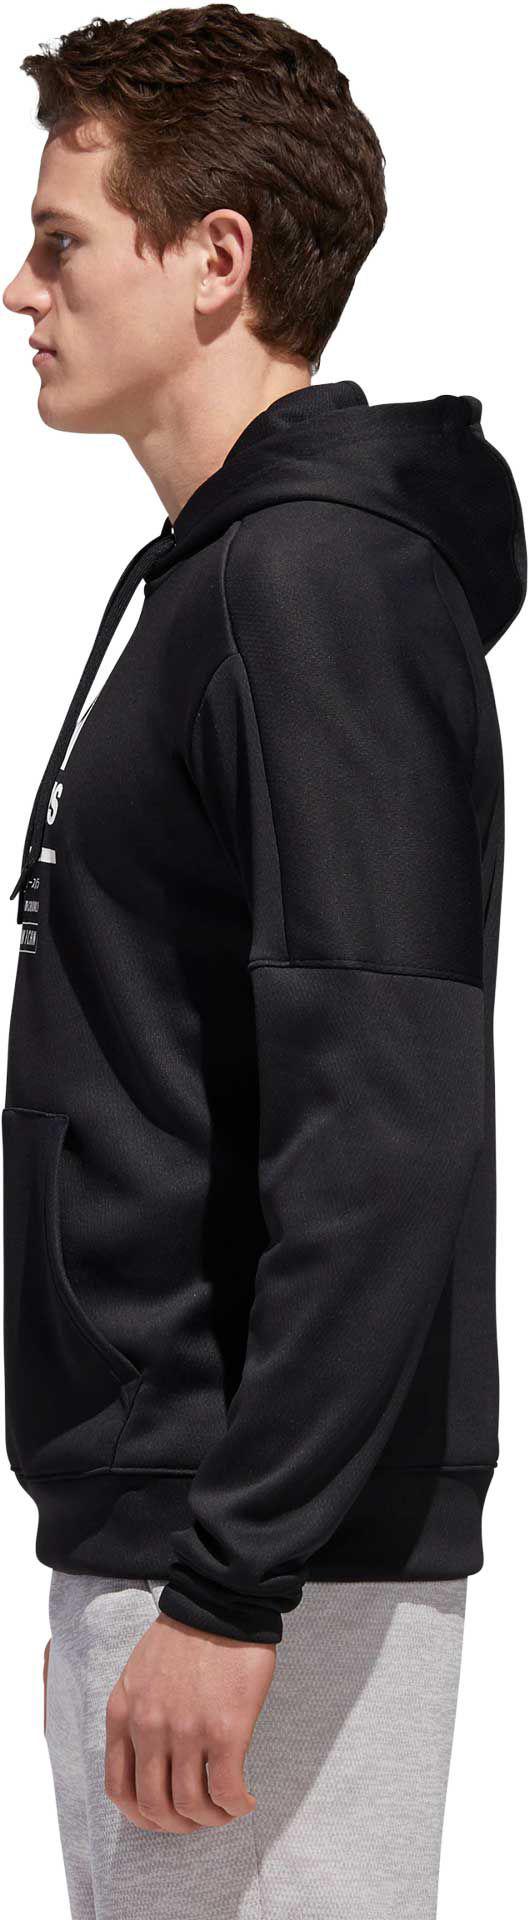 adidas Team Issue Fleece Hoodie in Black White (Black) for Men - Lyst